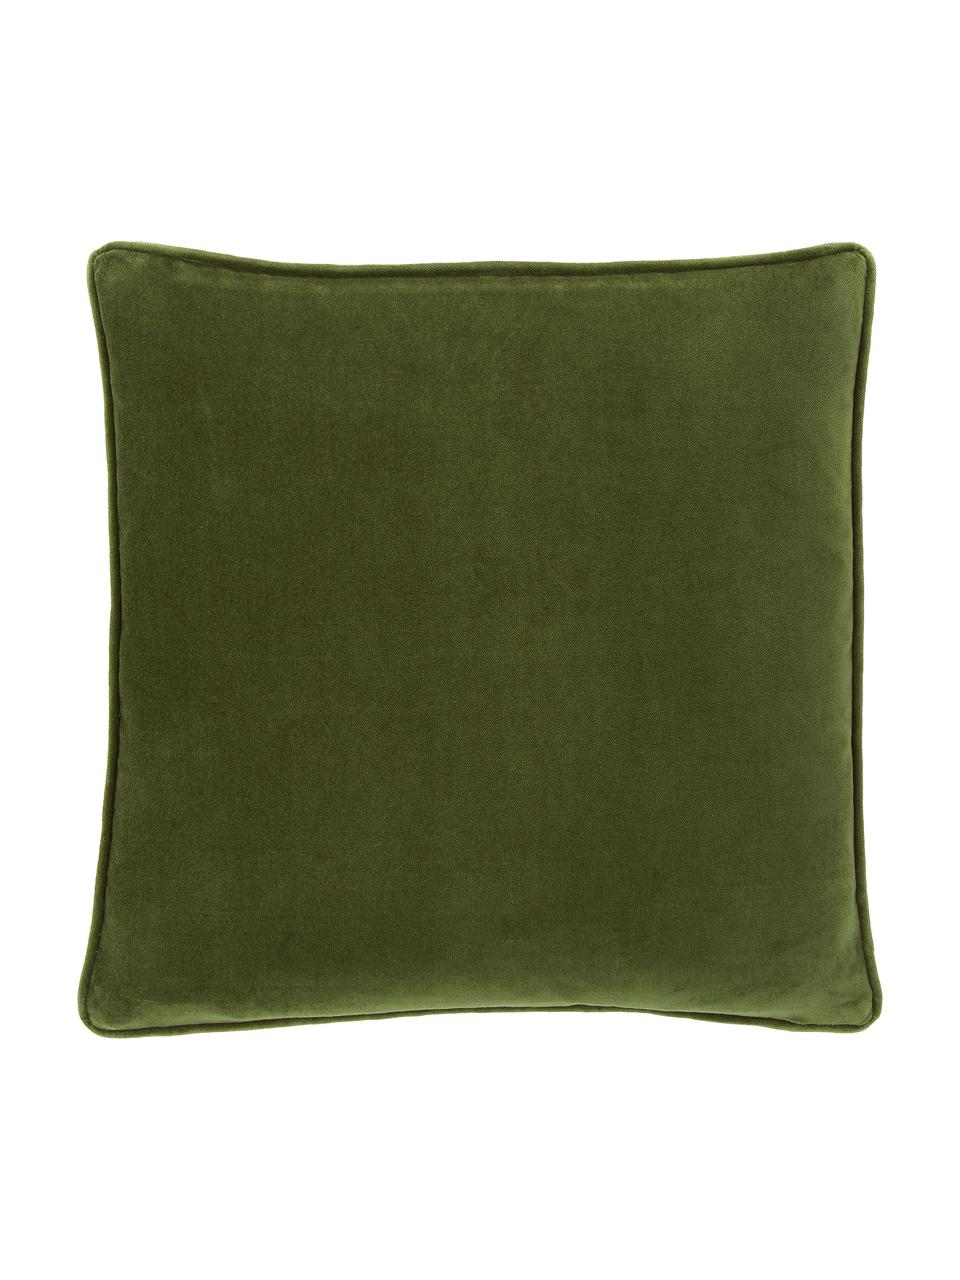 Einfarbige Samt-Kissenhülle Dana in Moosgrün, 100% Baumwollsamt, Moosgrün, B 50 x L 50 cm